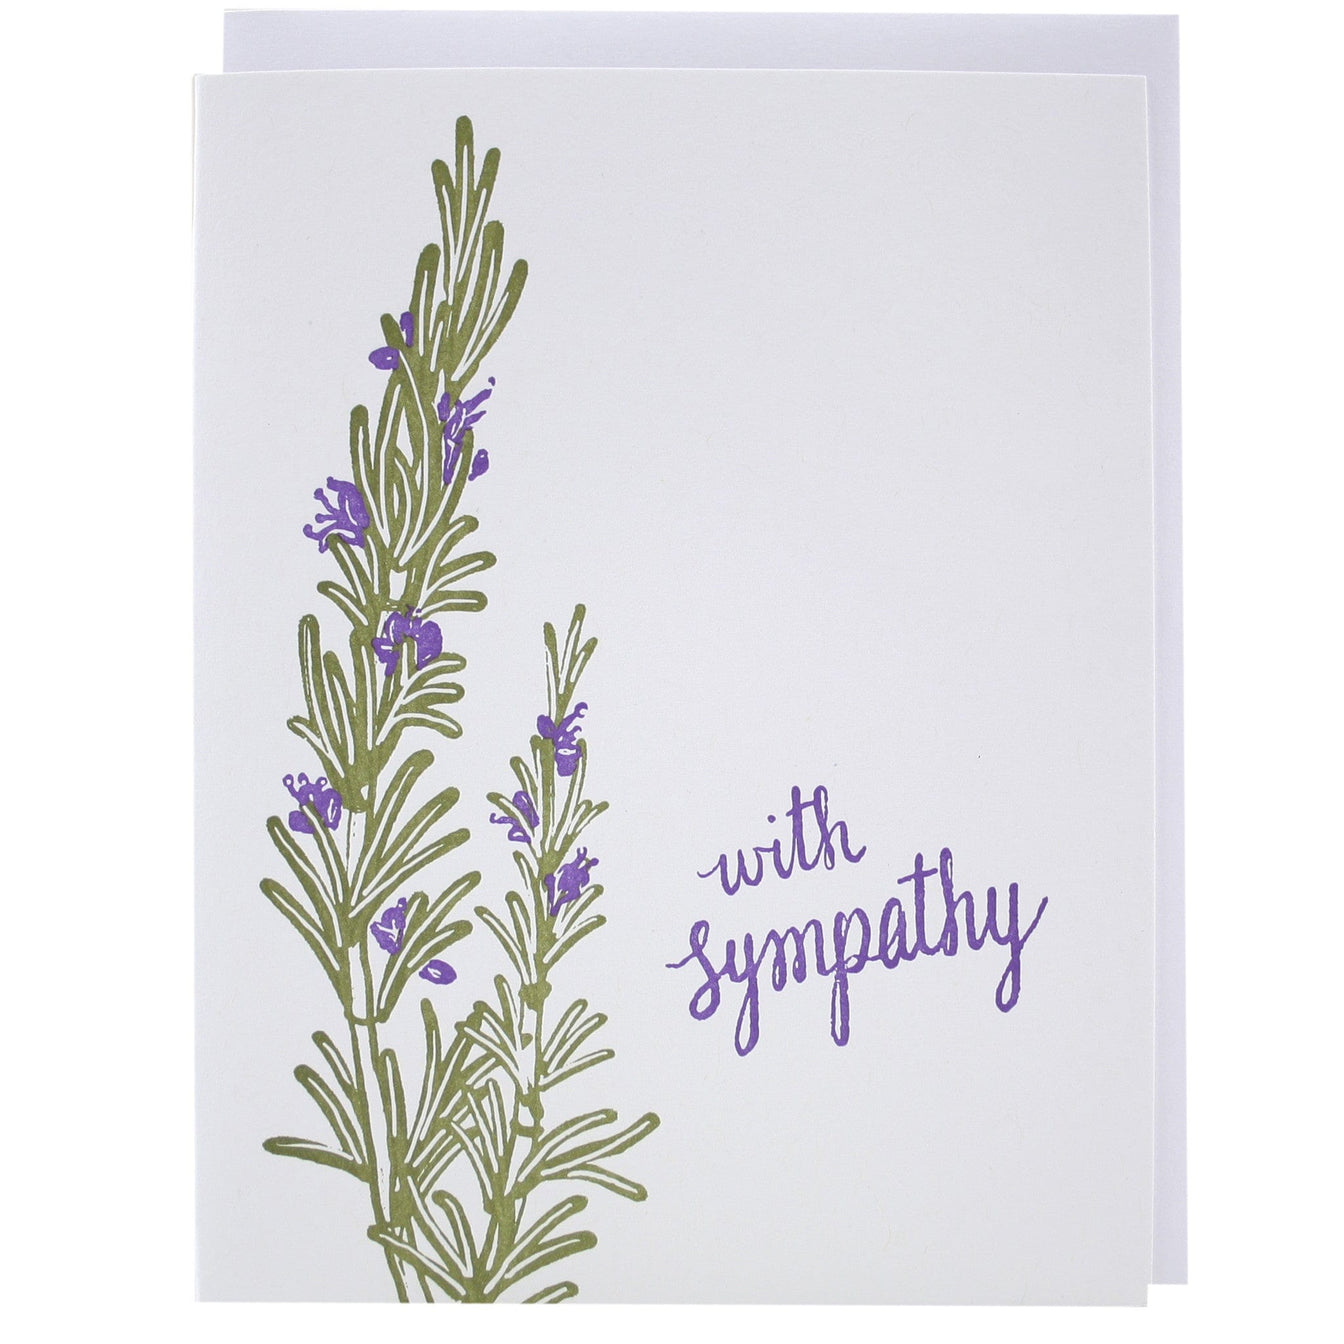 Rosemary Sympathy Card